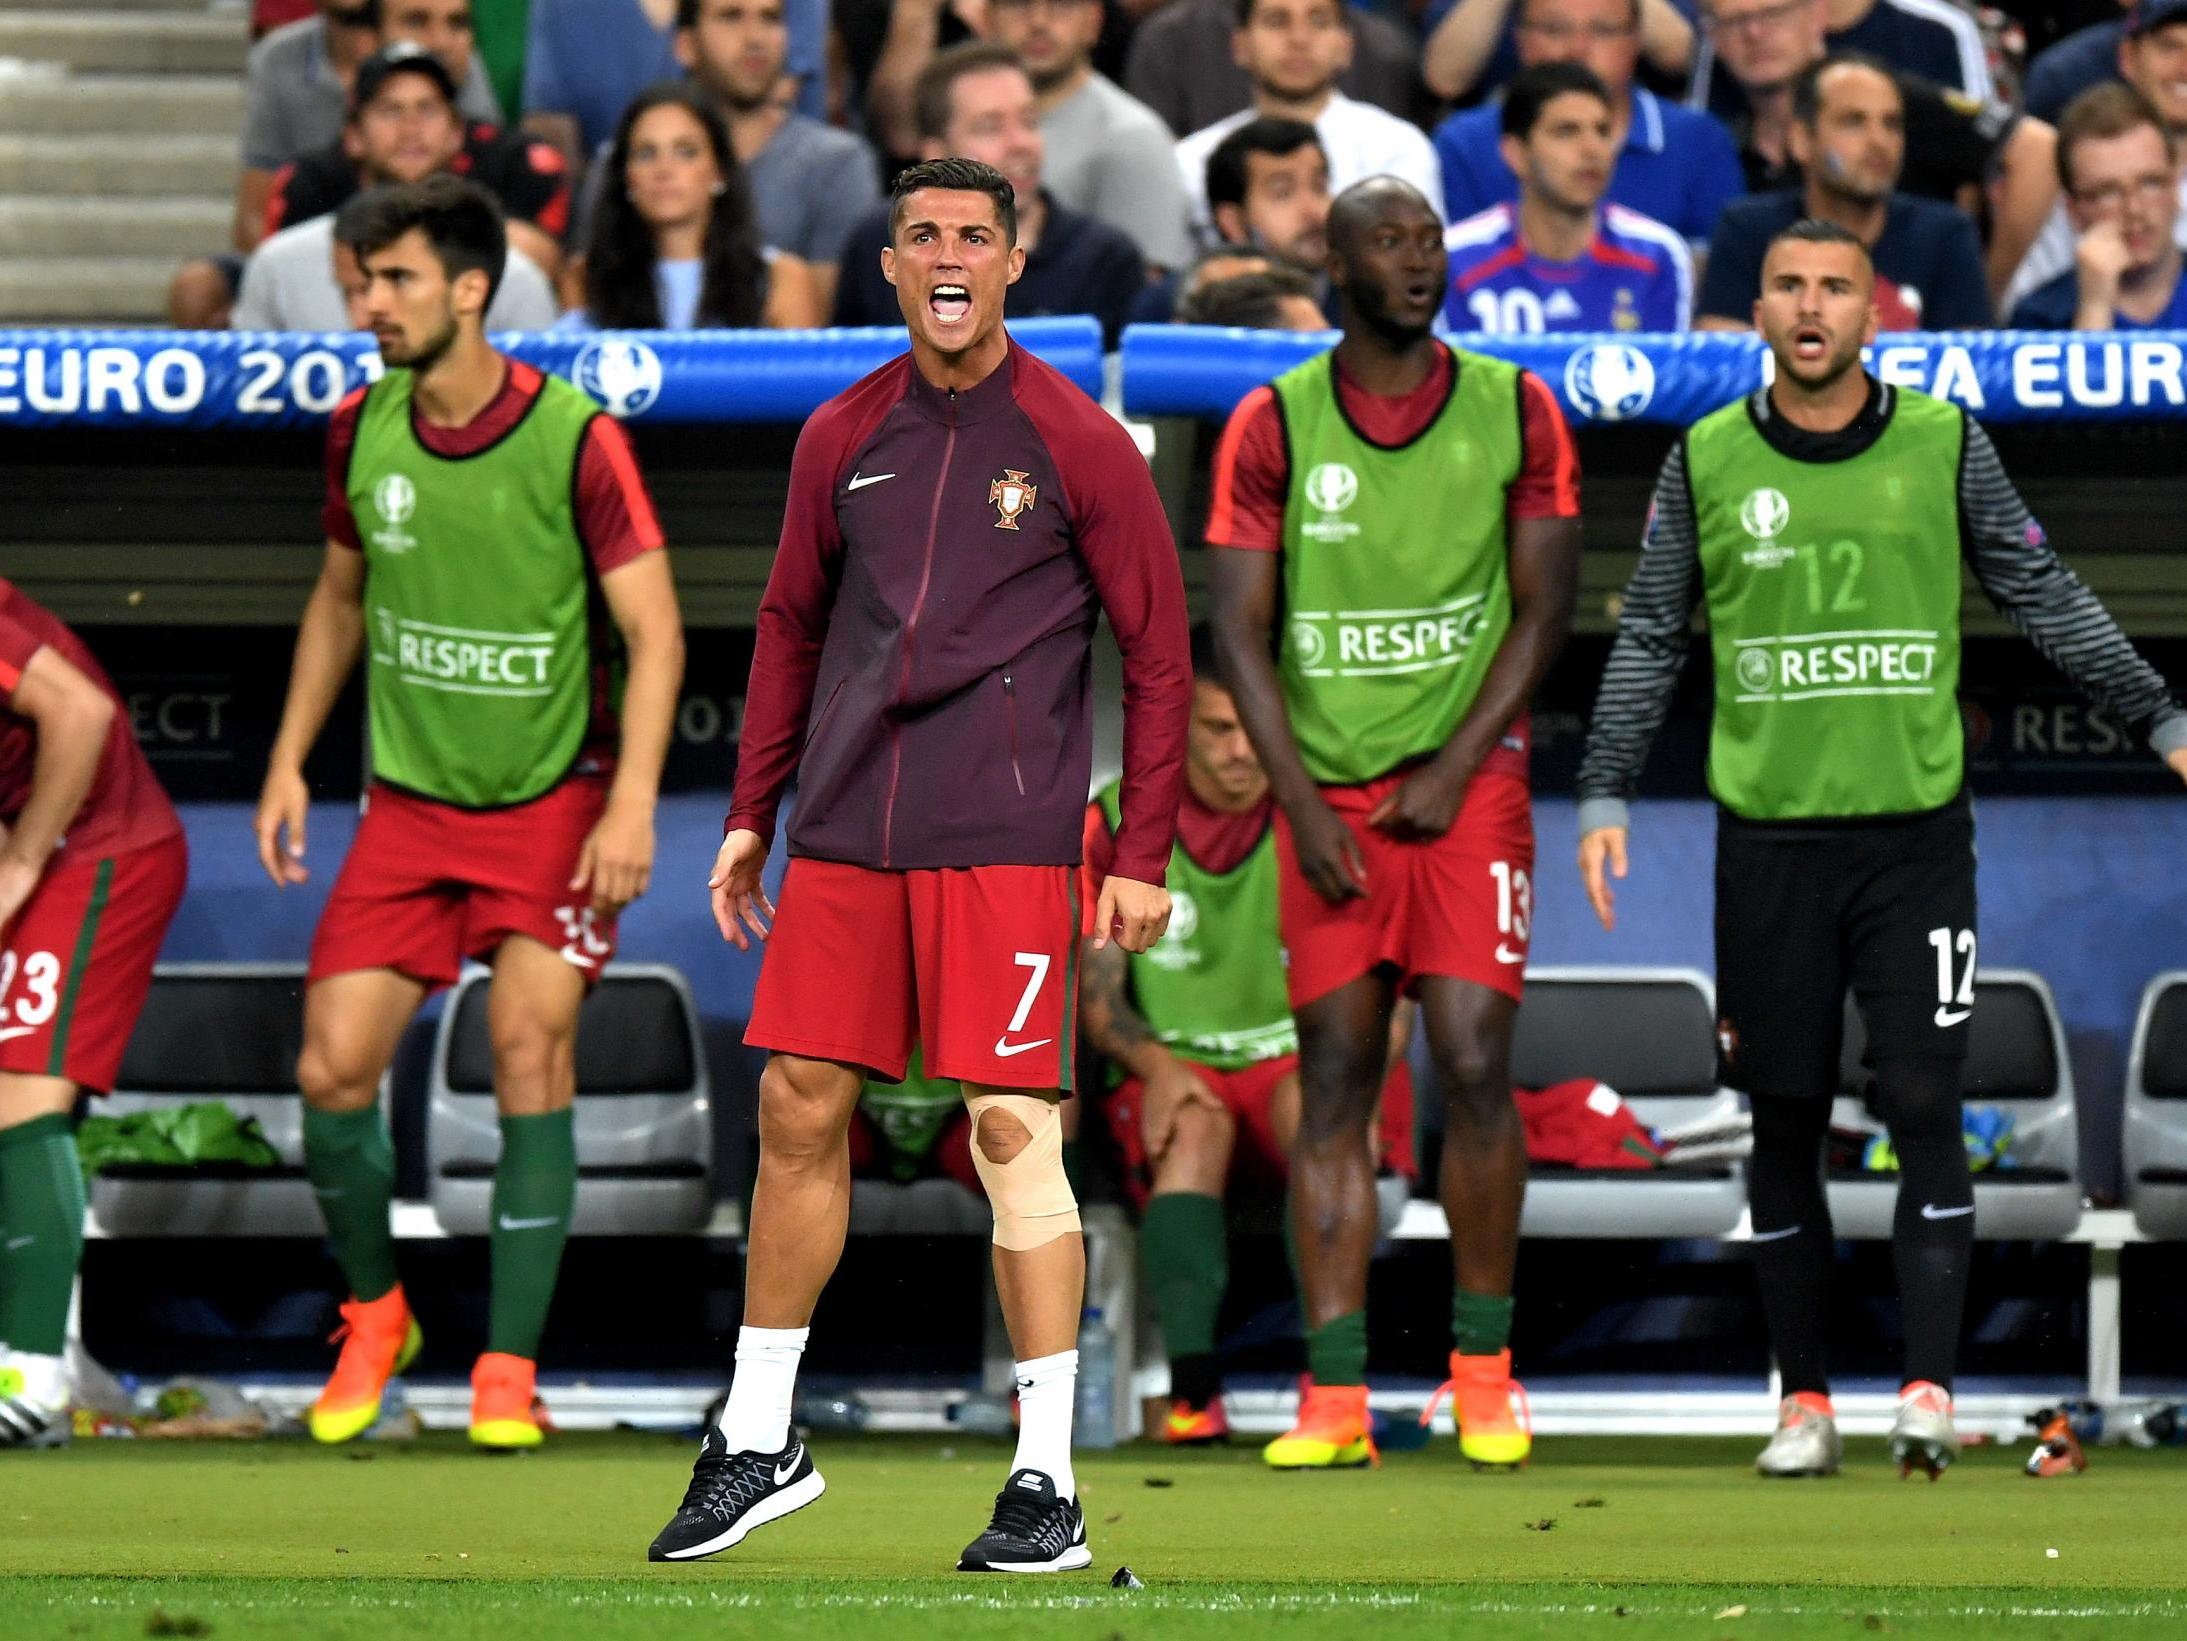 Ronaldo has shown his leadership with Portugal